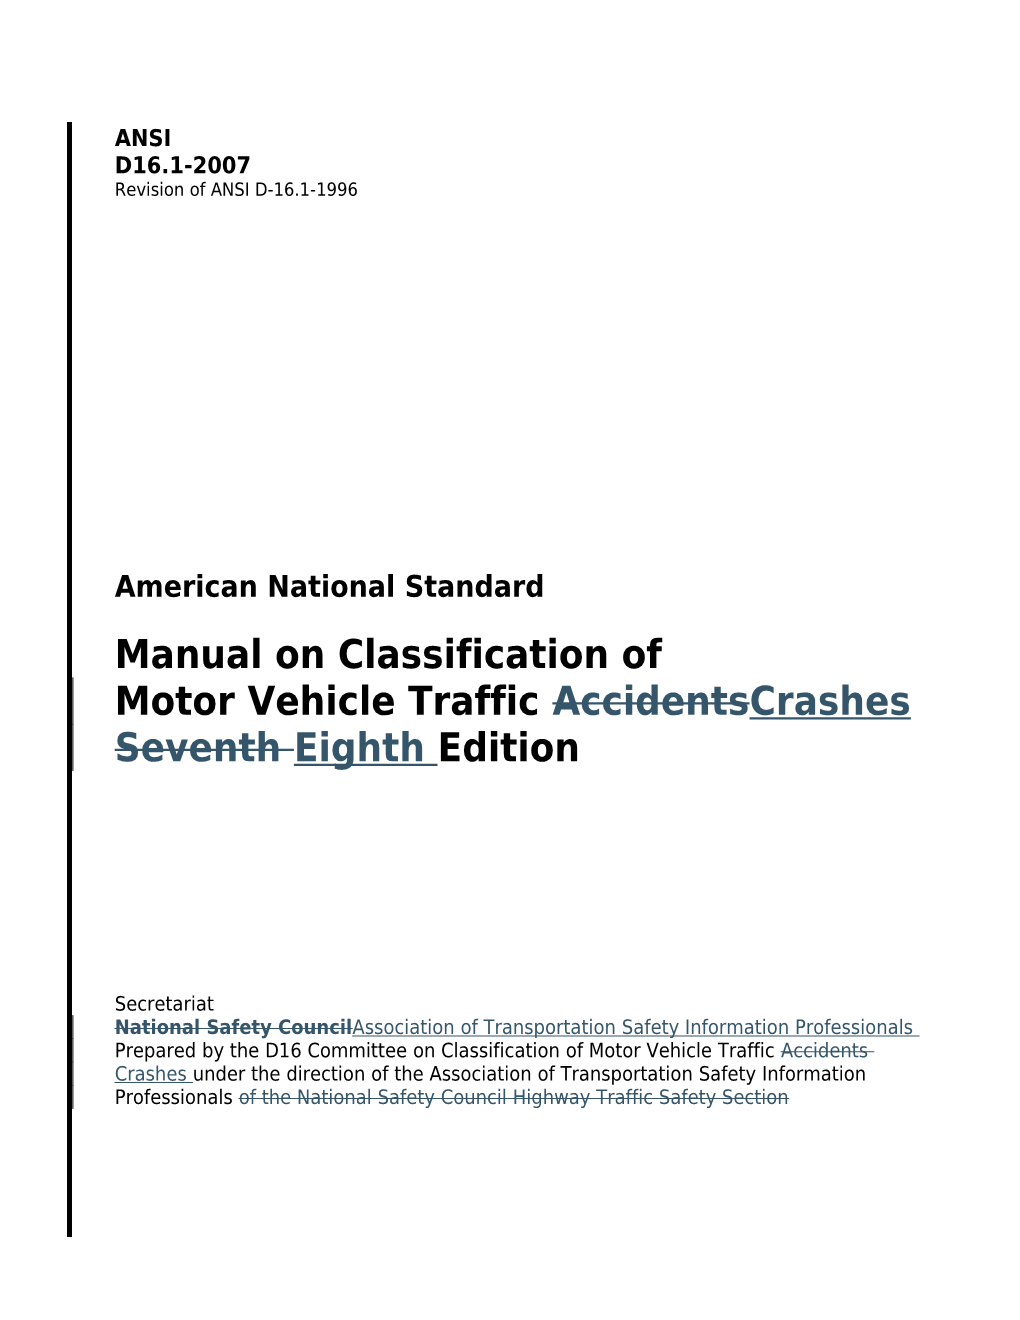 American National Standard ANSI D-16.1 - 2007